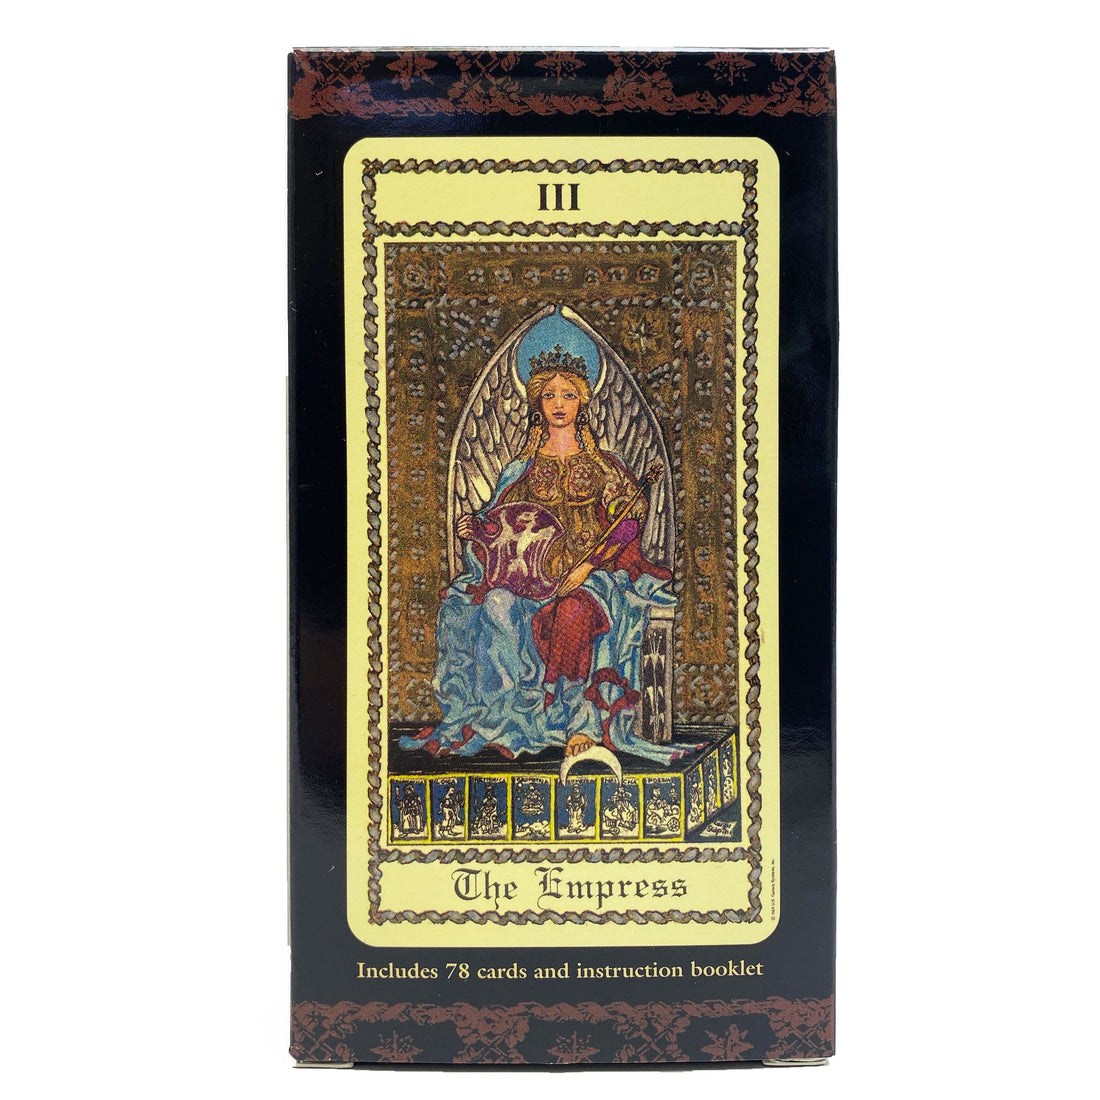 The Medieval Scapini Tarot Deck Tarot Cards Non-HOI 